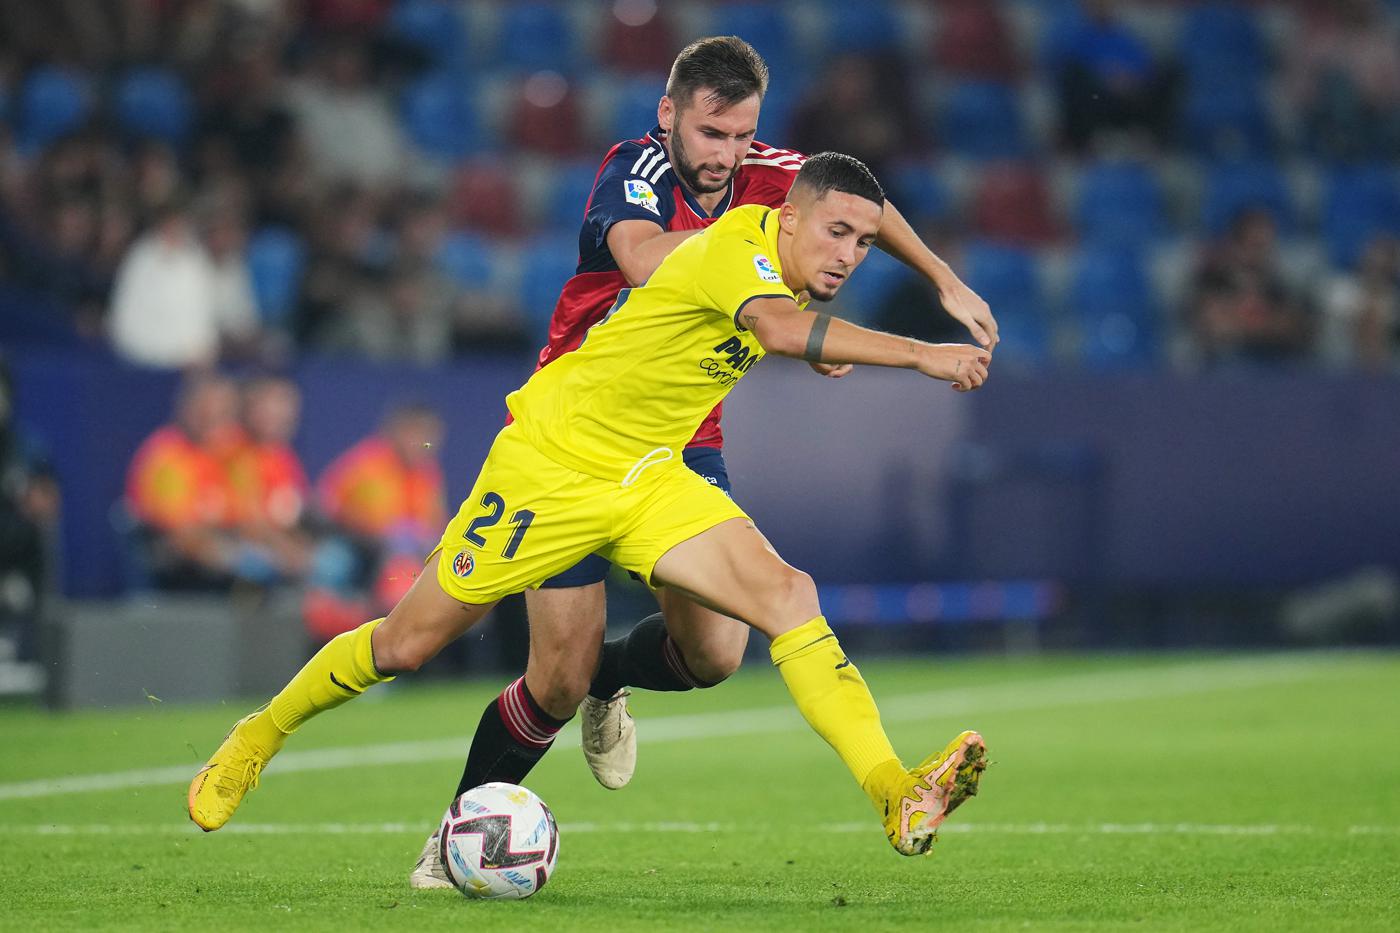 Osasuna - Villarreal - 0:3. Spain Championship, 26th round. Match review, statistics